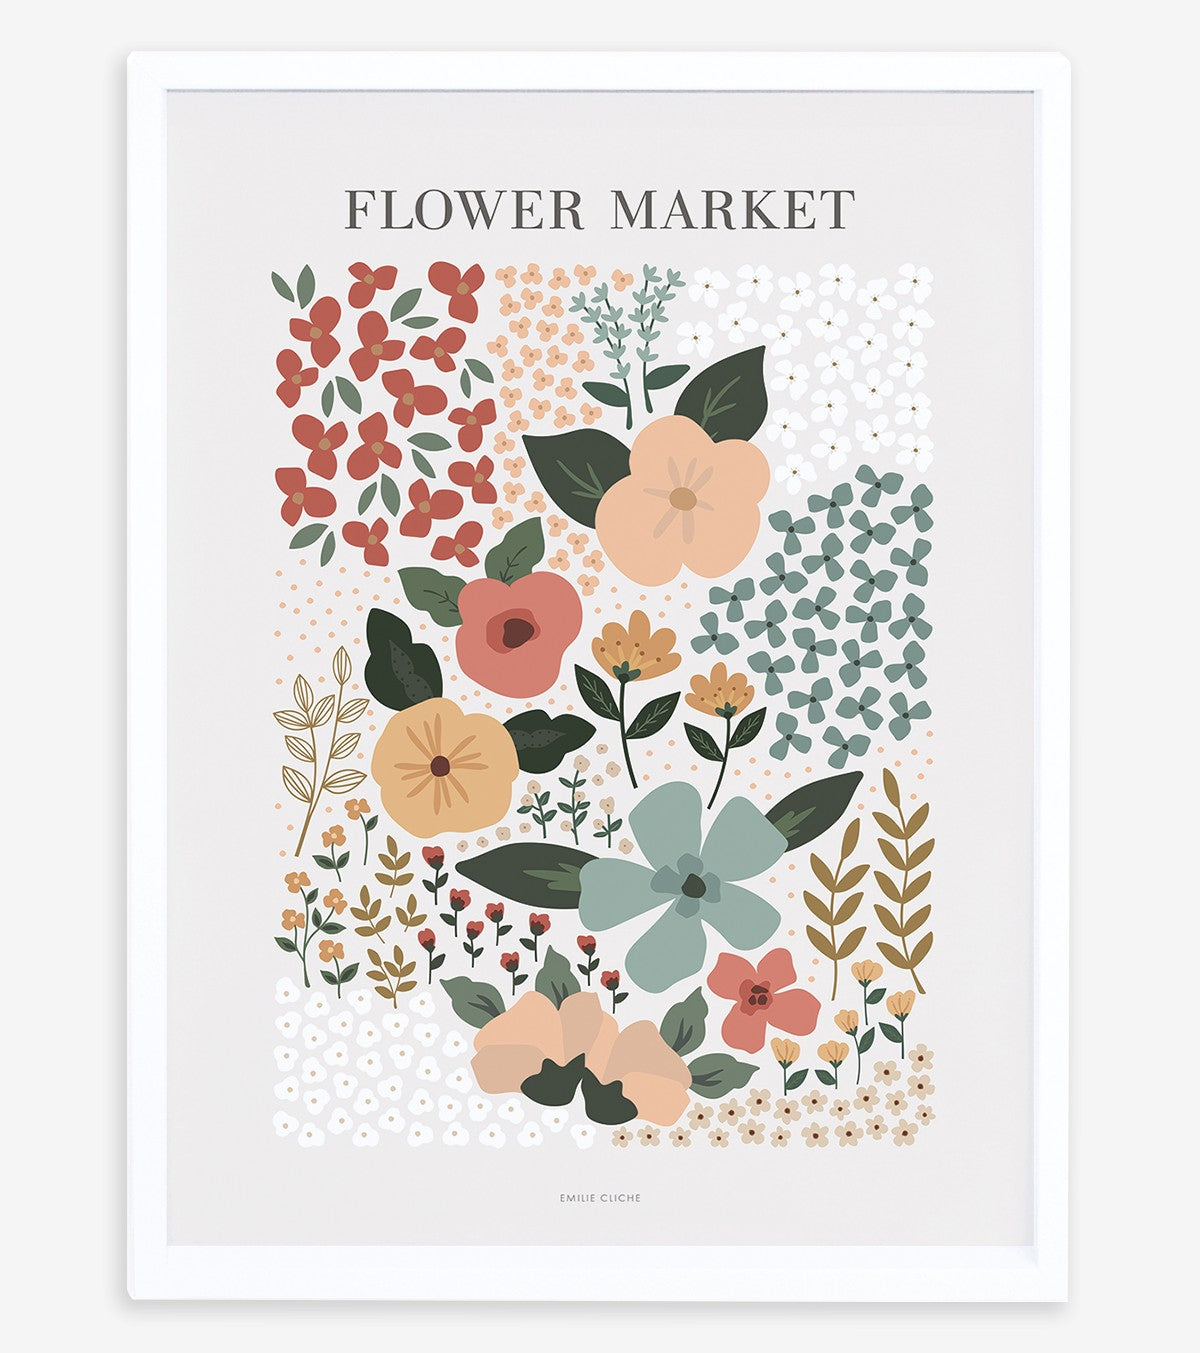 BLOEM - Cartaz infantil - Mercado das flores